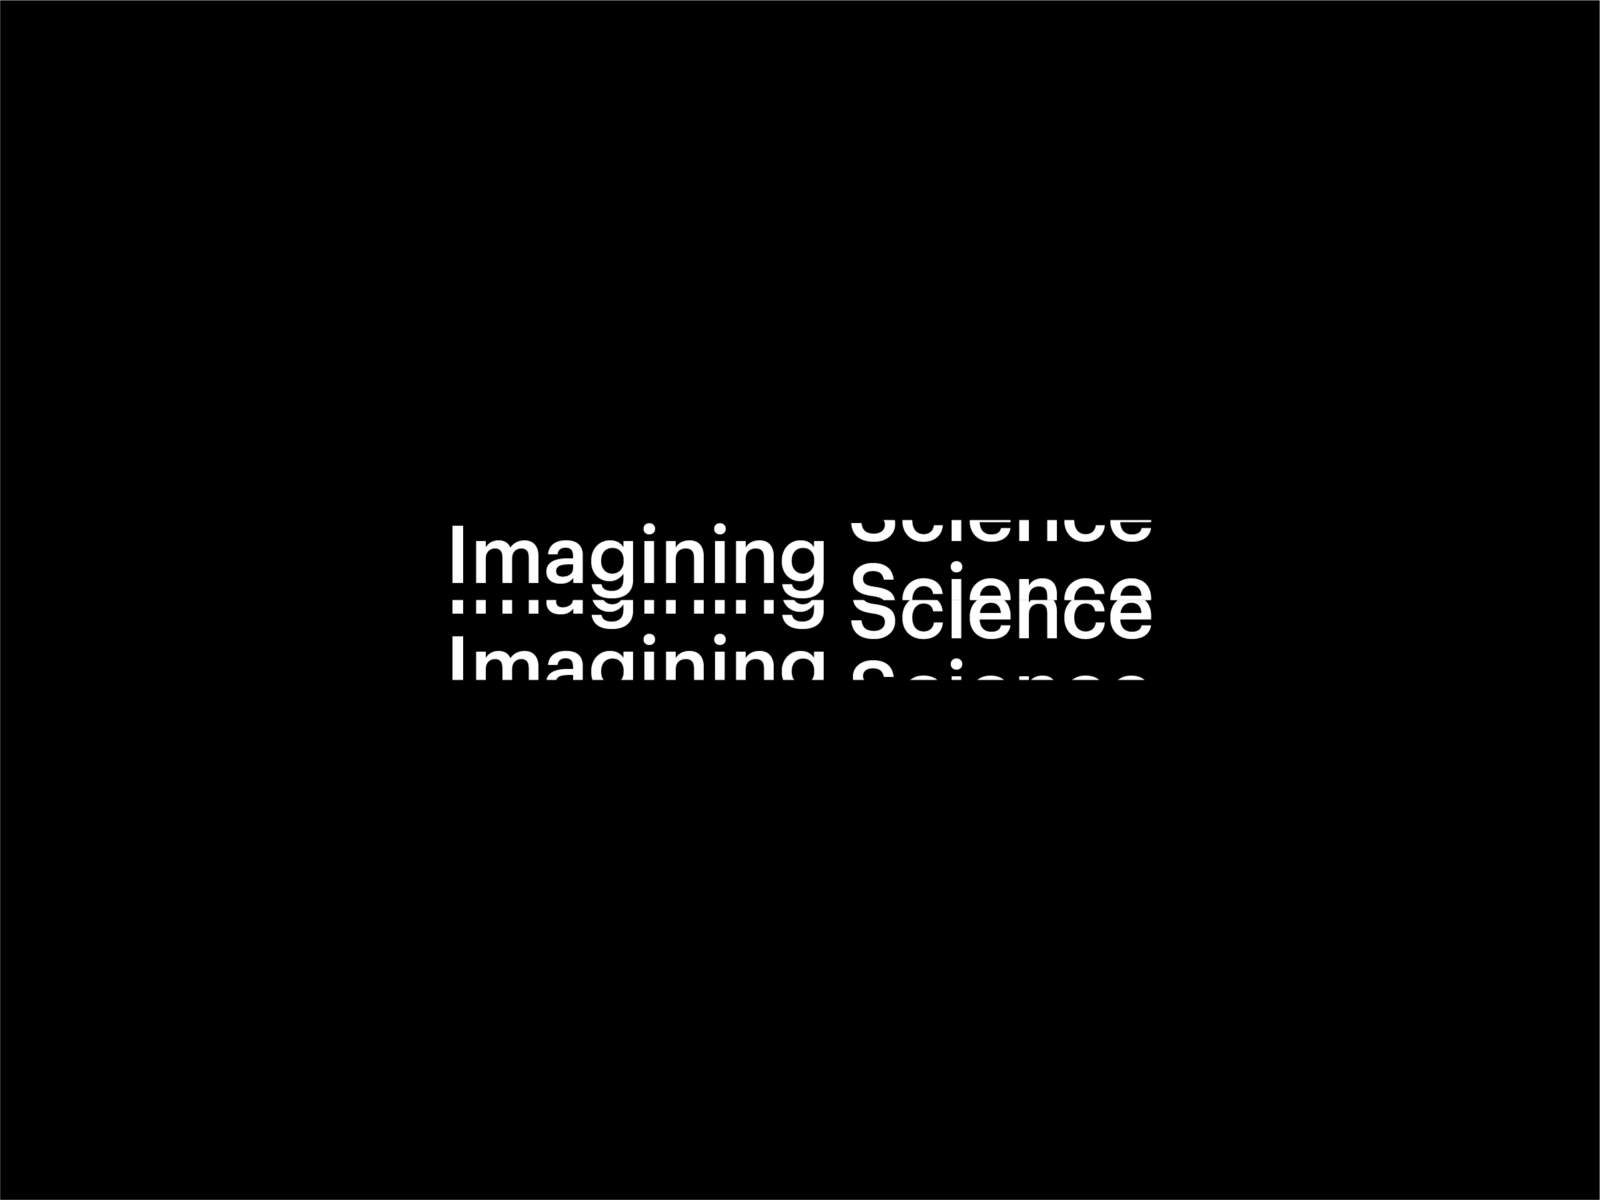 Imagining Science conceptual visual essay, double logotype